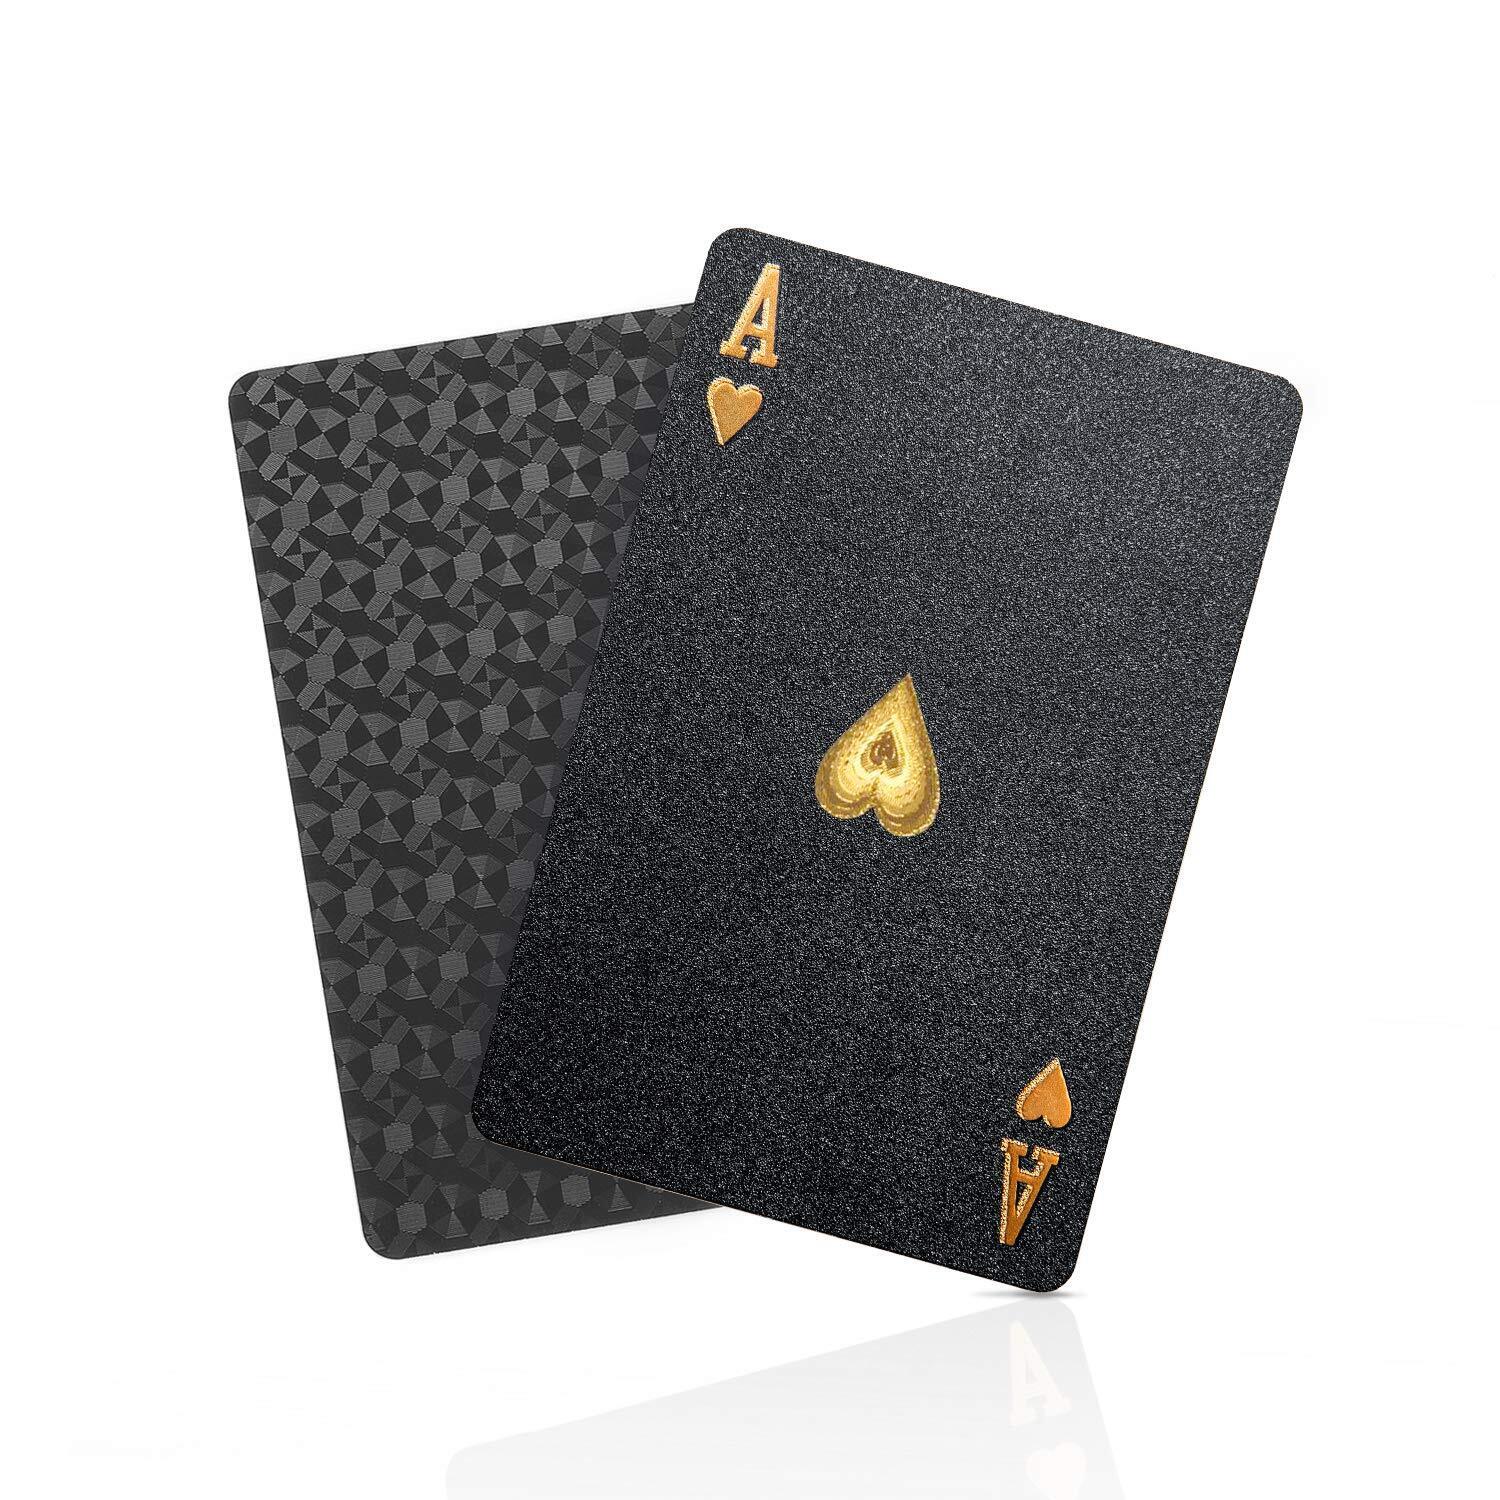 Diamond Waterproof Black Playing Cards, Poker Cards, HD, Deck of Cards (Black)